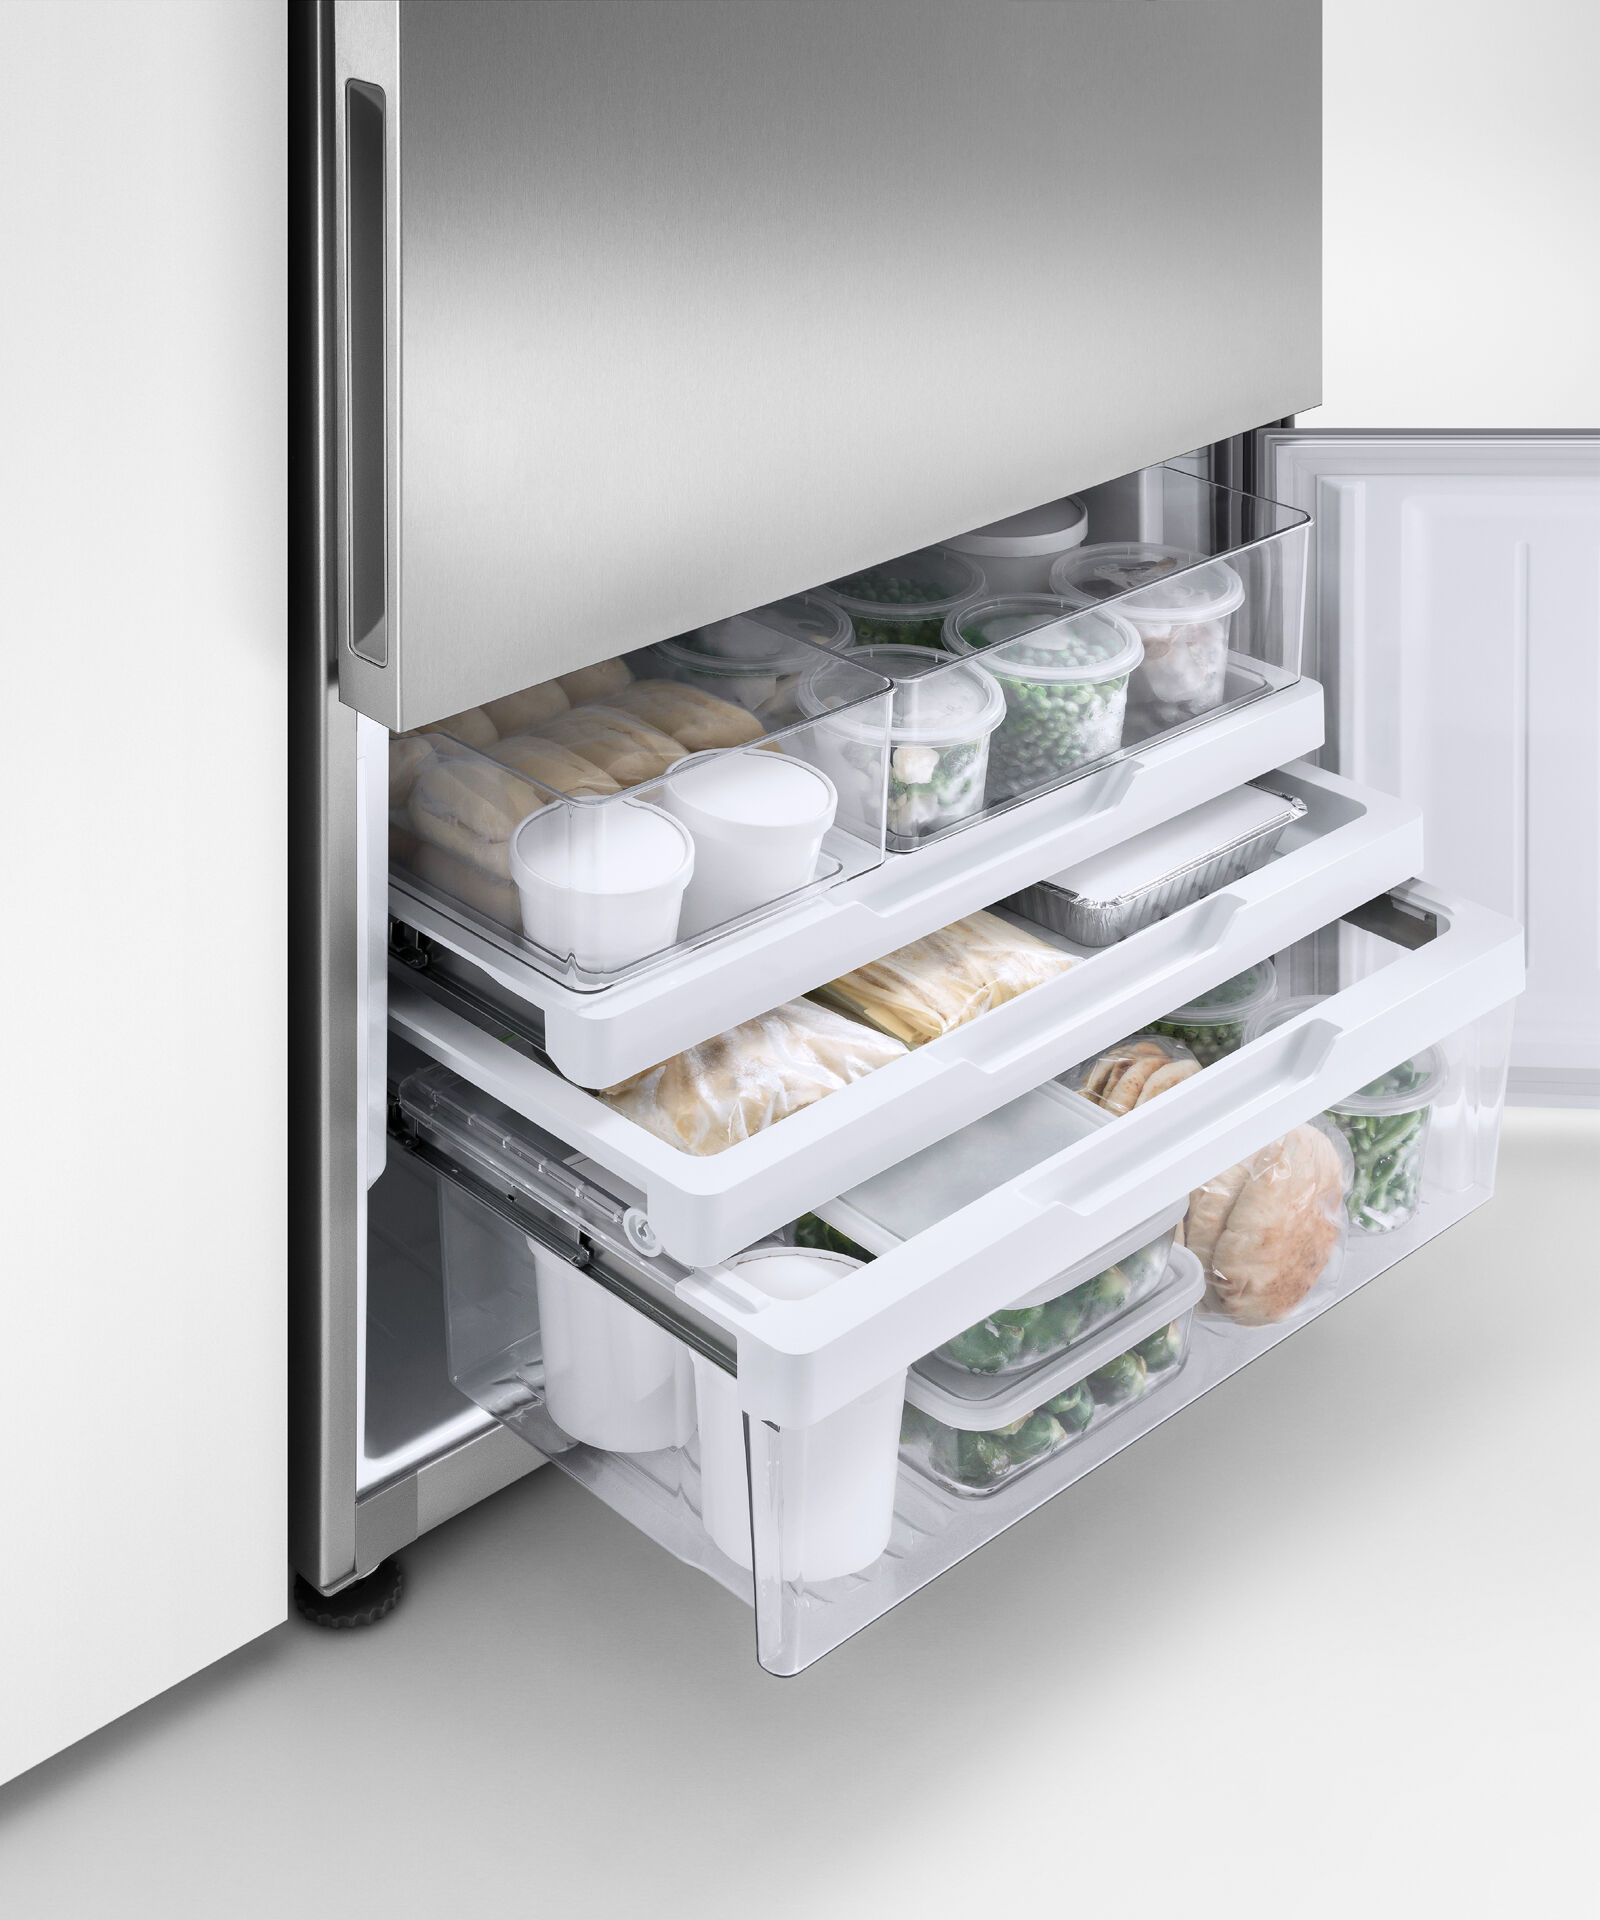 Freestanding Refrigerator Freezer, 79cm gallery image 4.0